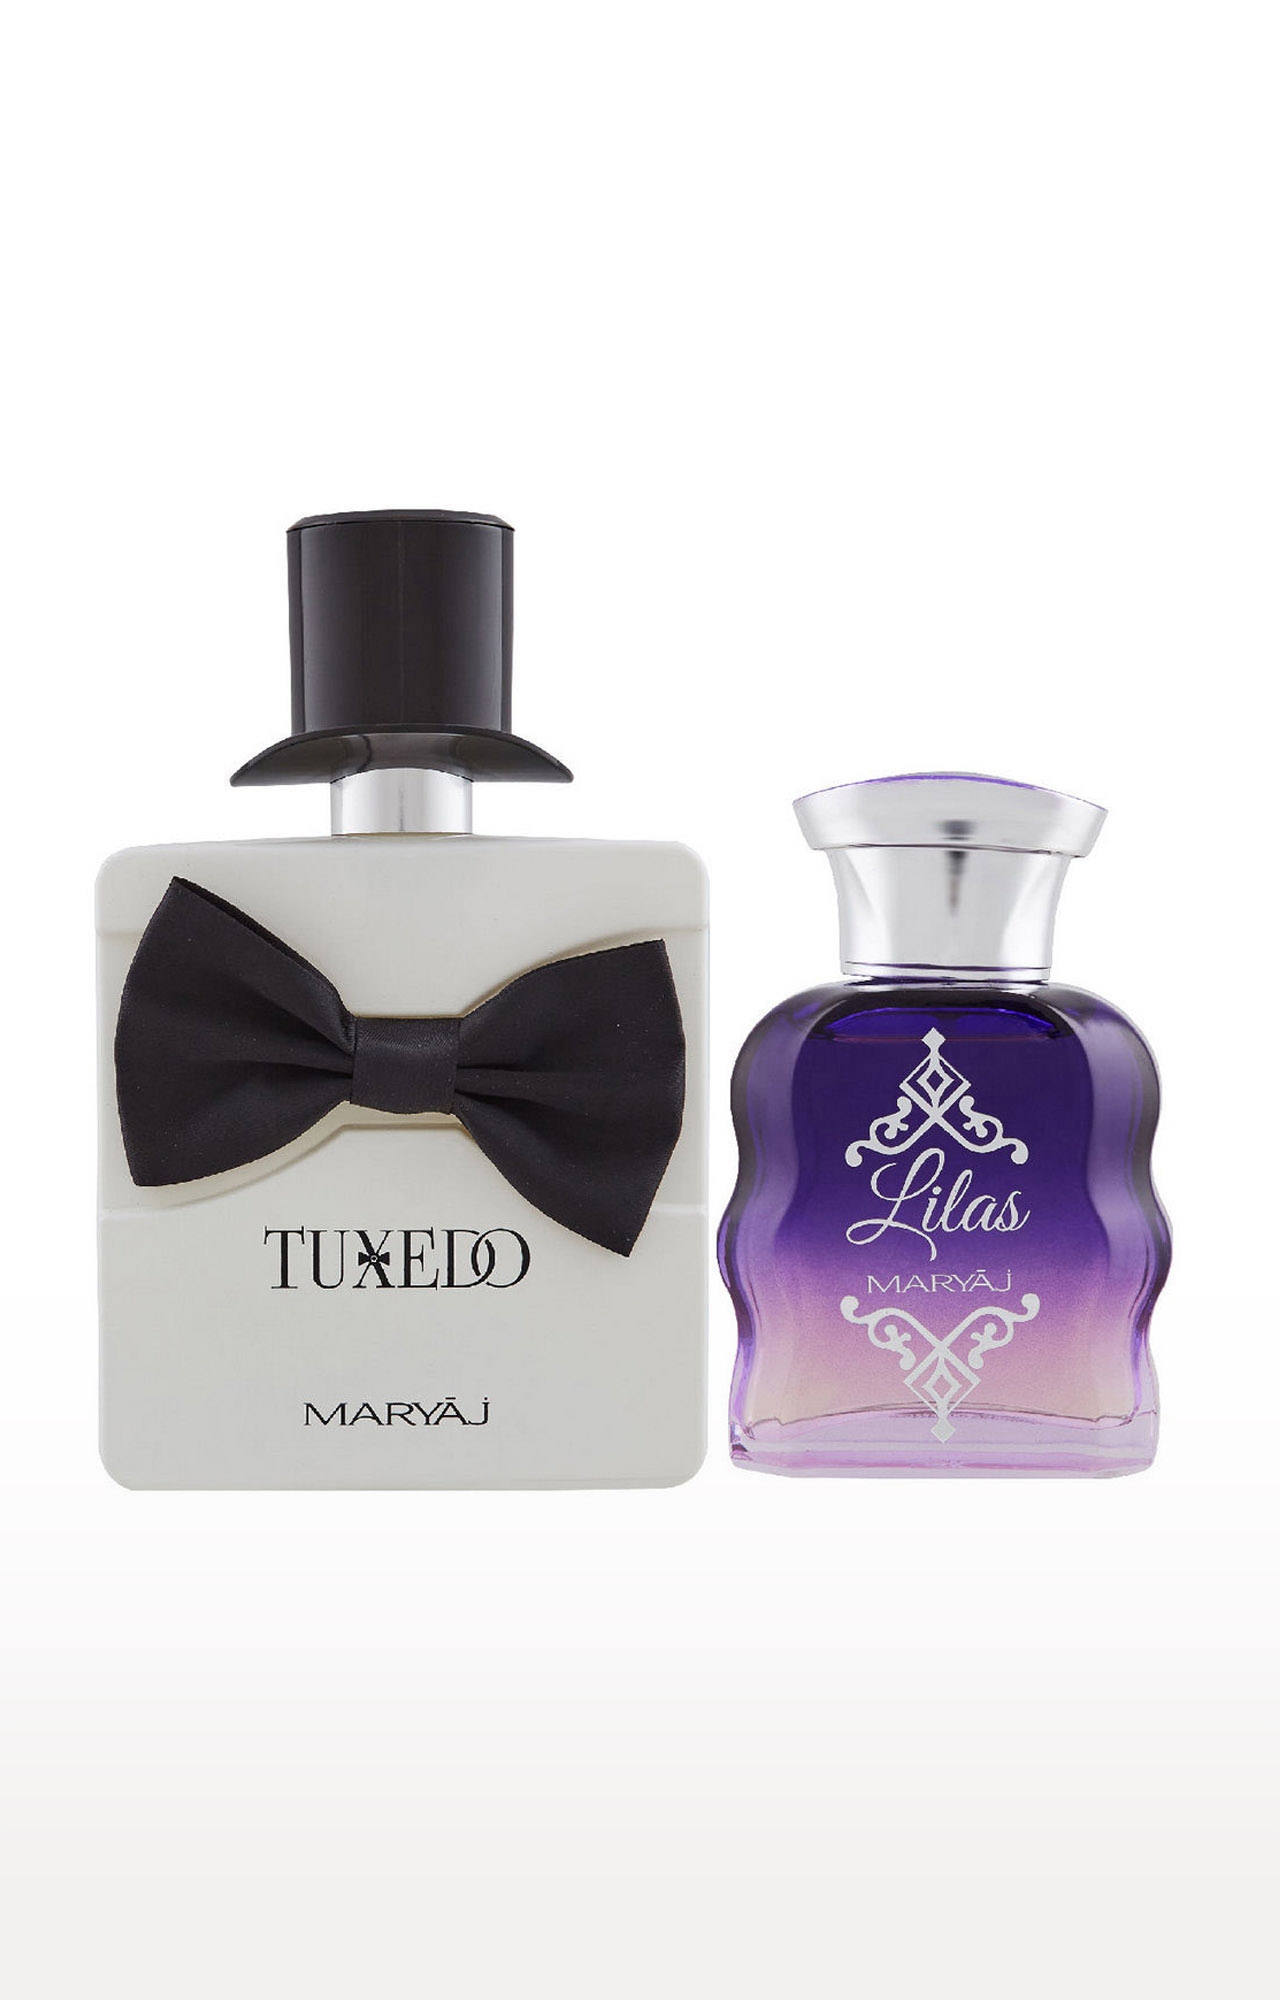 Maryaj | Maryaj Tuxedo Eau De Parfum Spicy Woody Perfume 100ml for Men and Maryaj Lilas Eau De Parfum Citrus Floral Perfume 100ml for Women